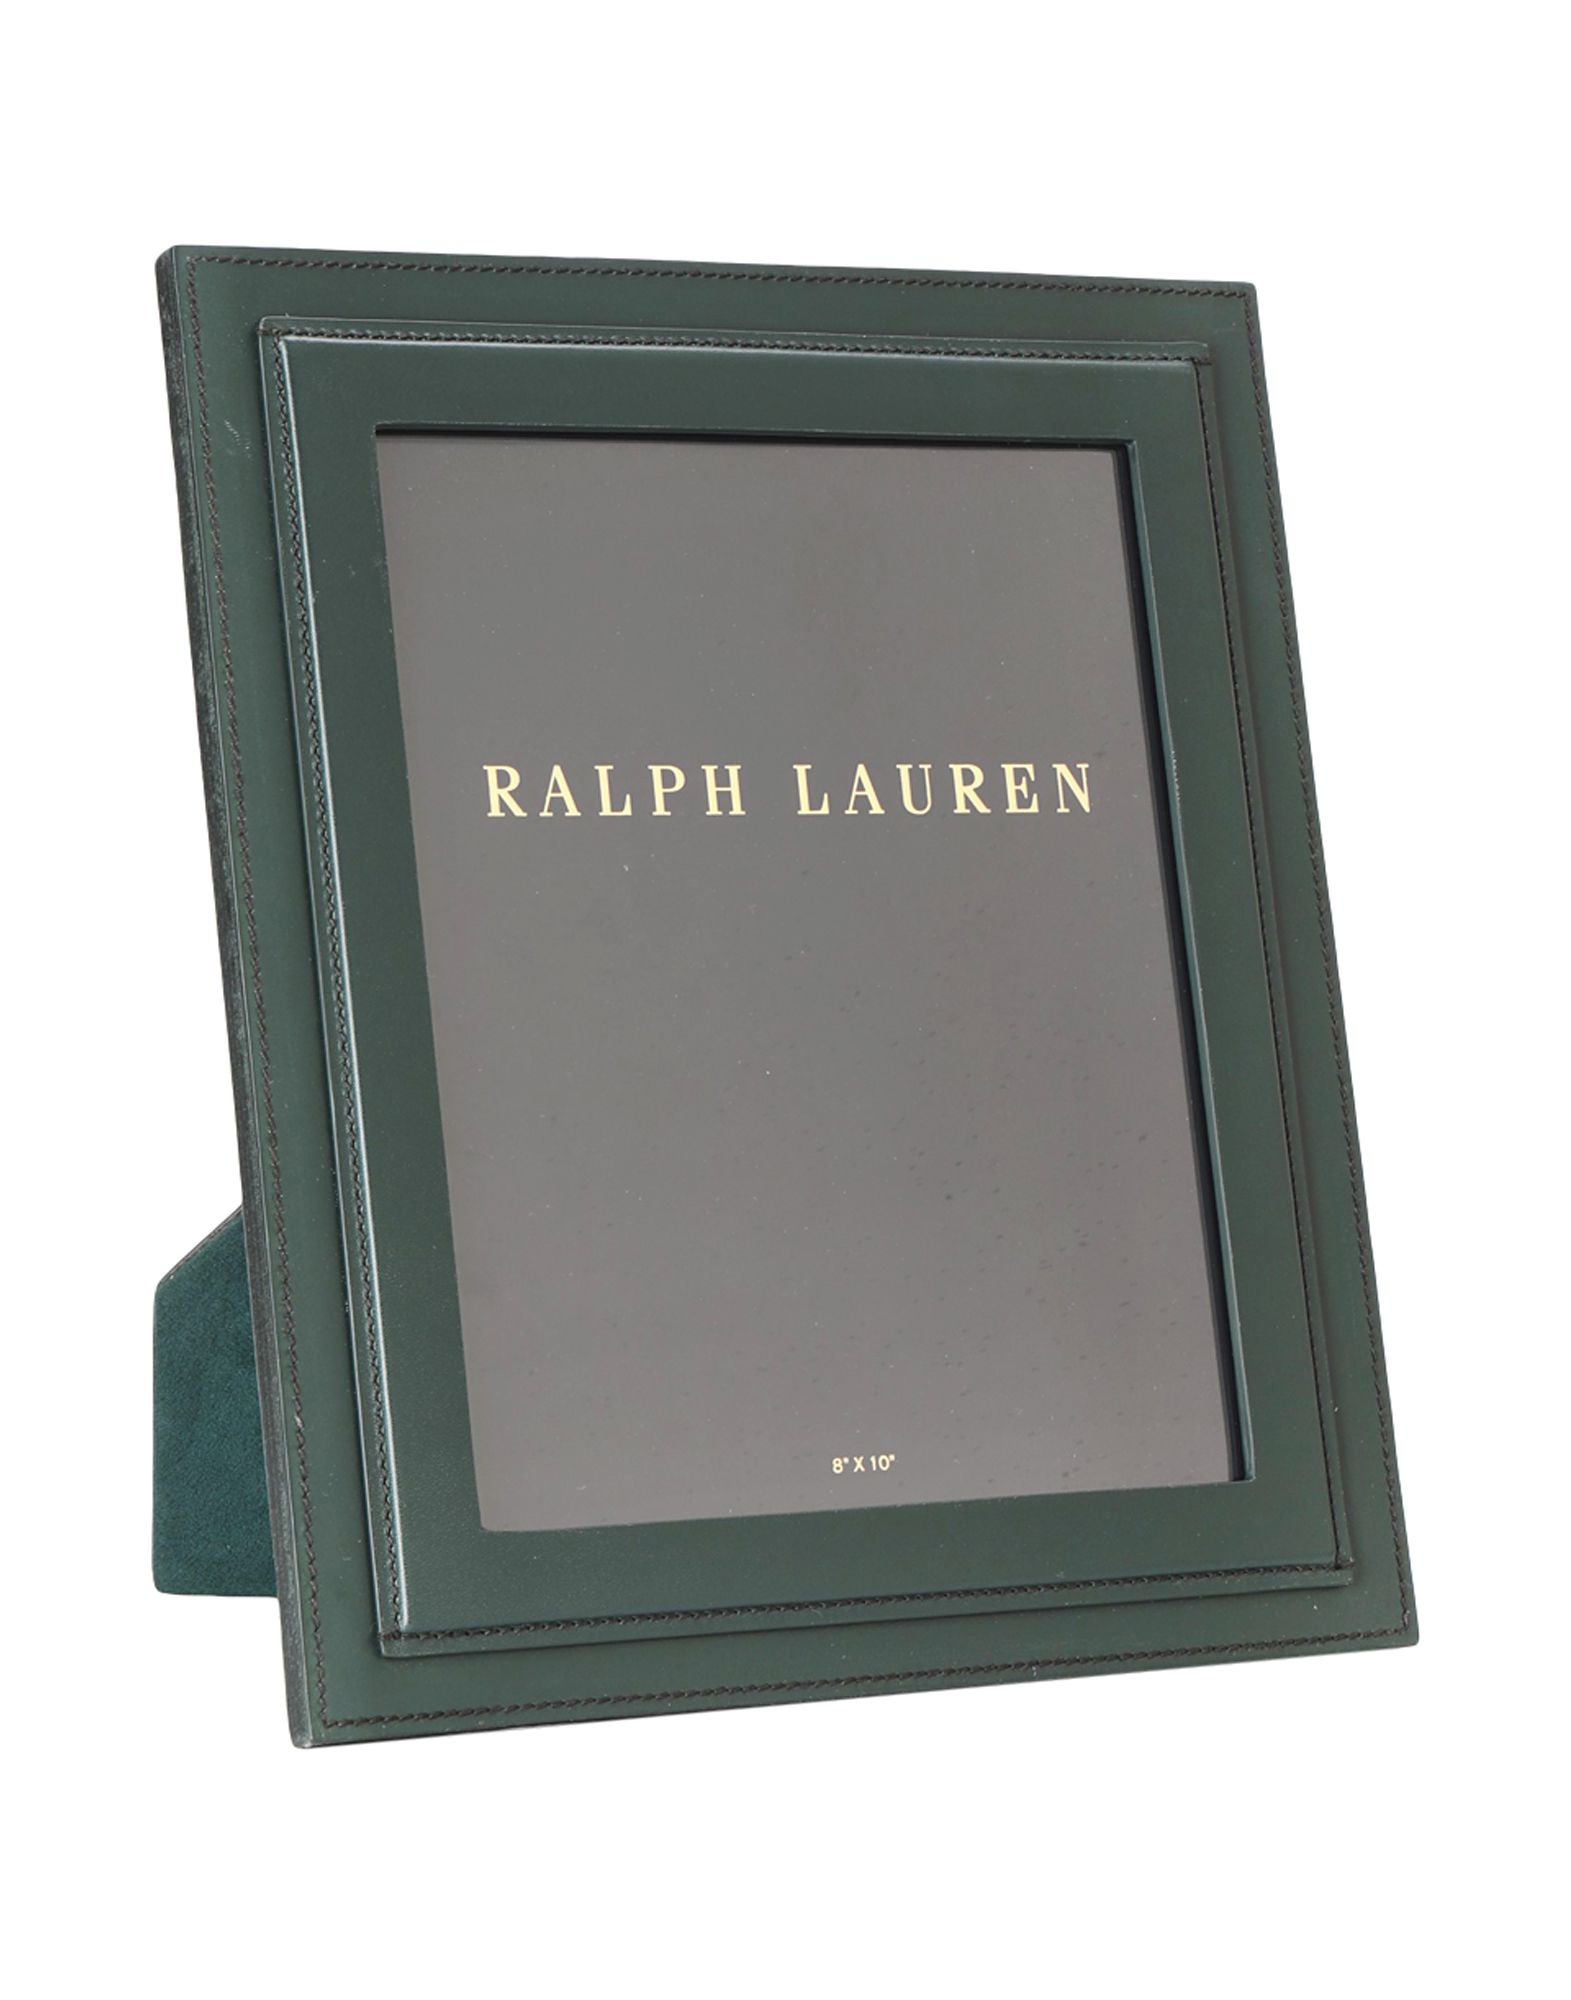  Ralph Lauren Home - Objetos De Decoración - Marcos - On Yoox.com 